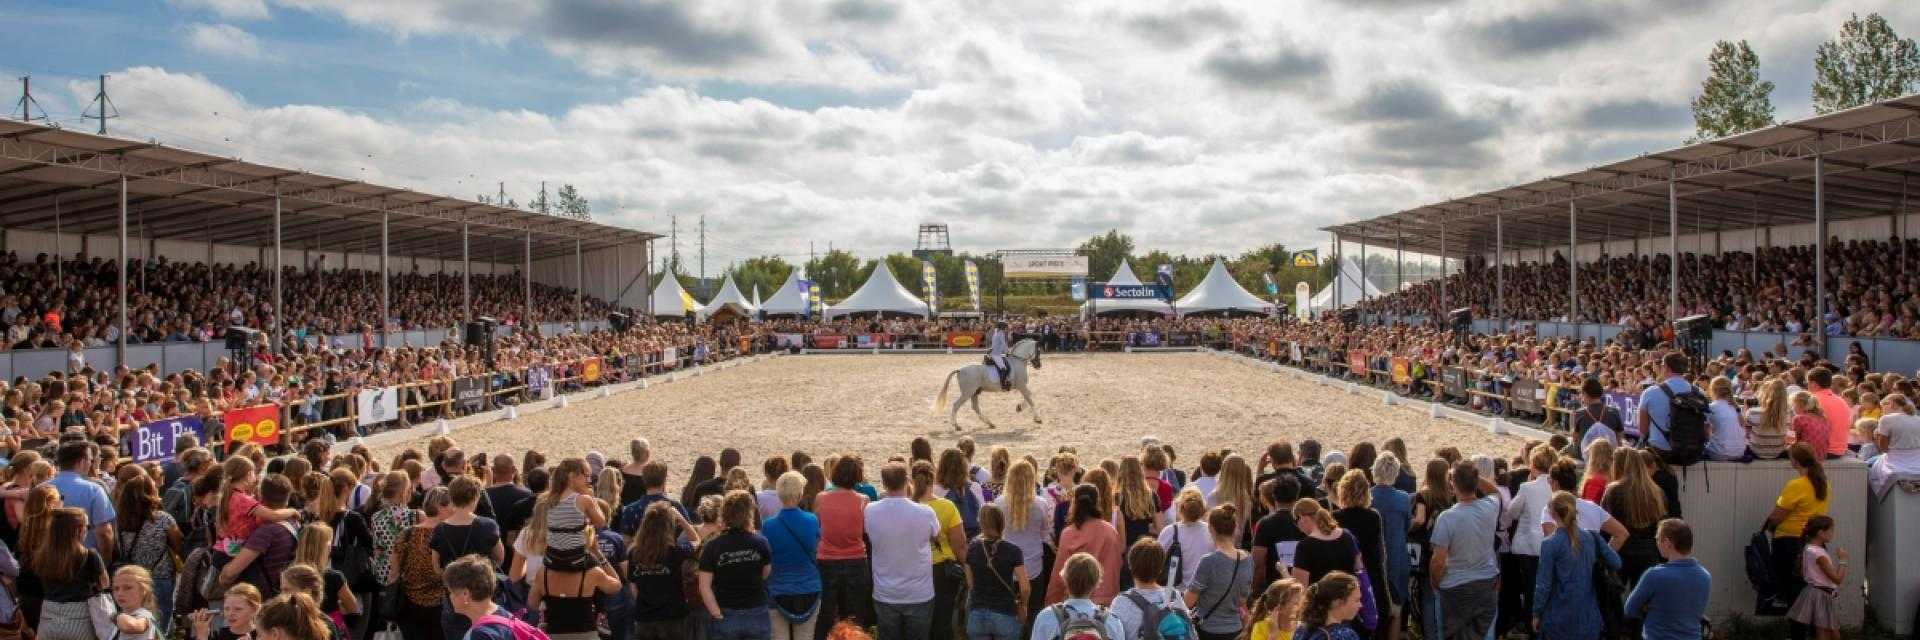 Horse Event in Expo Haarlemmermeer 